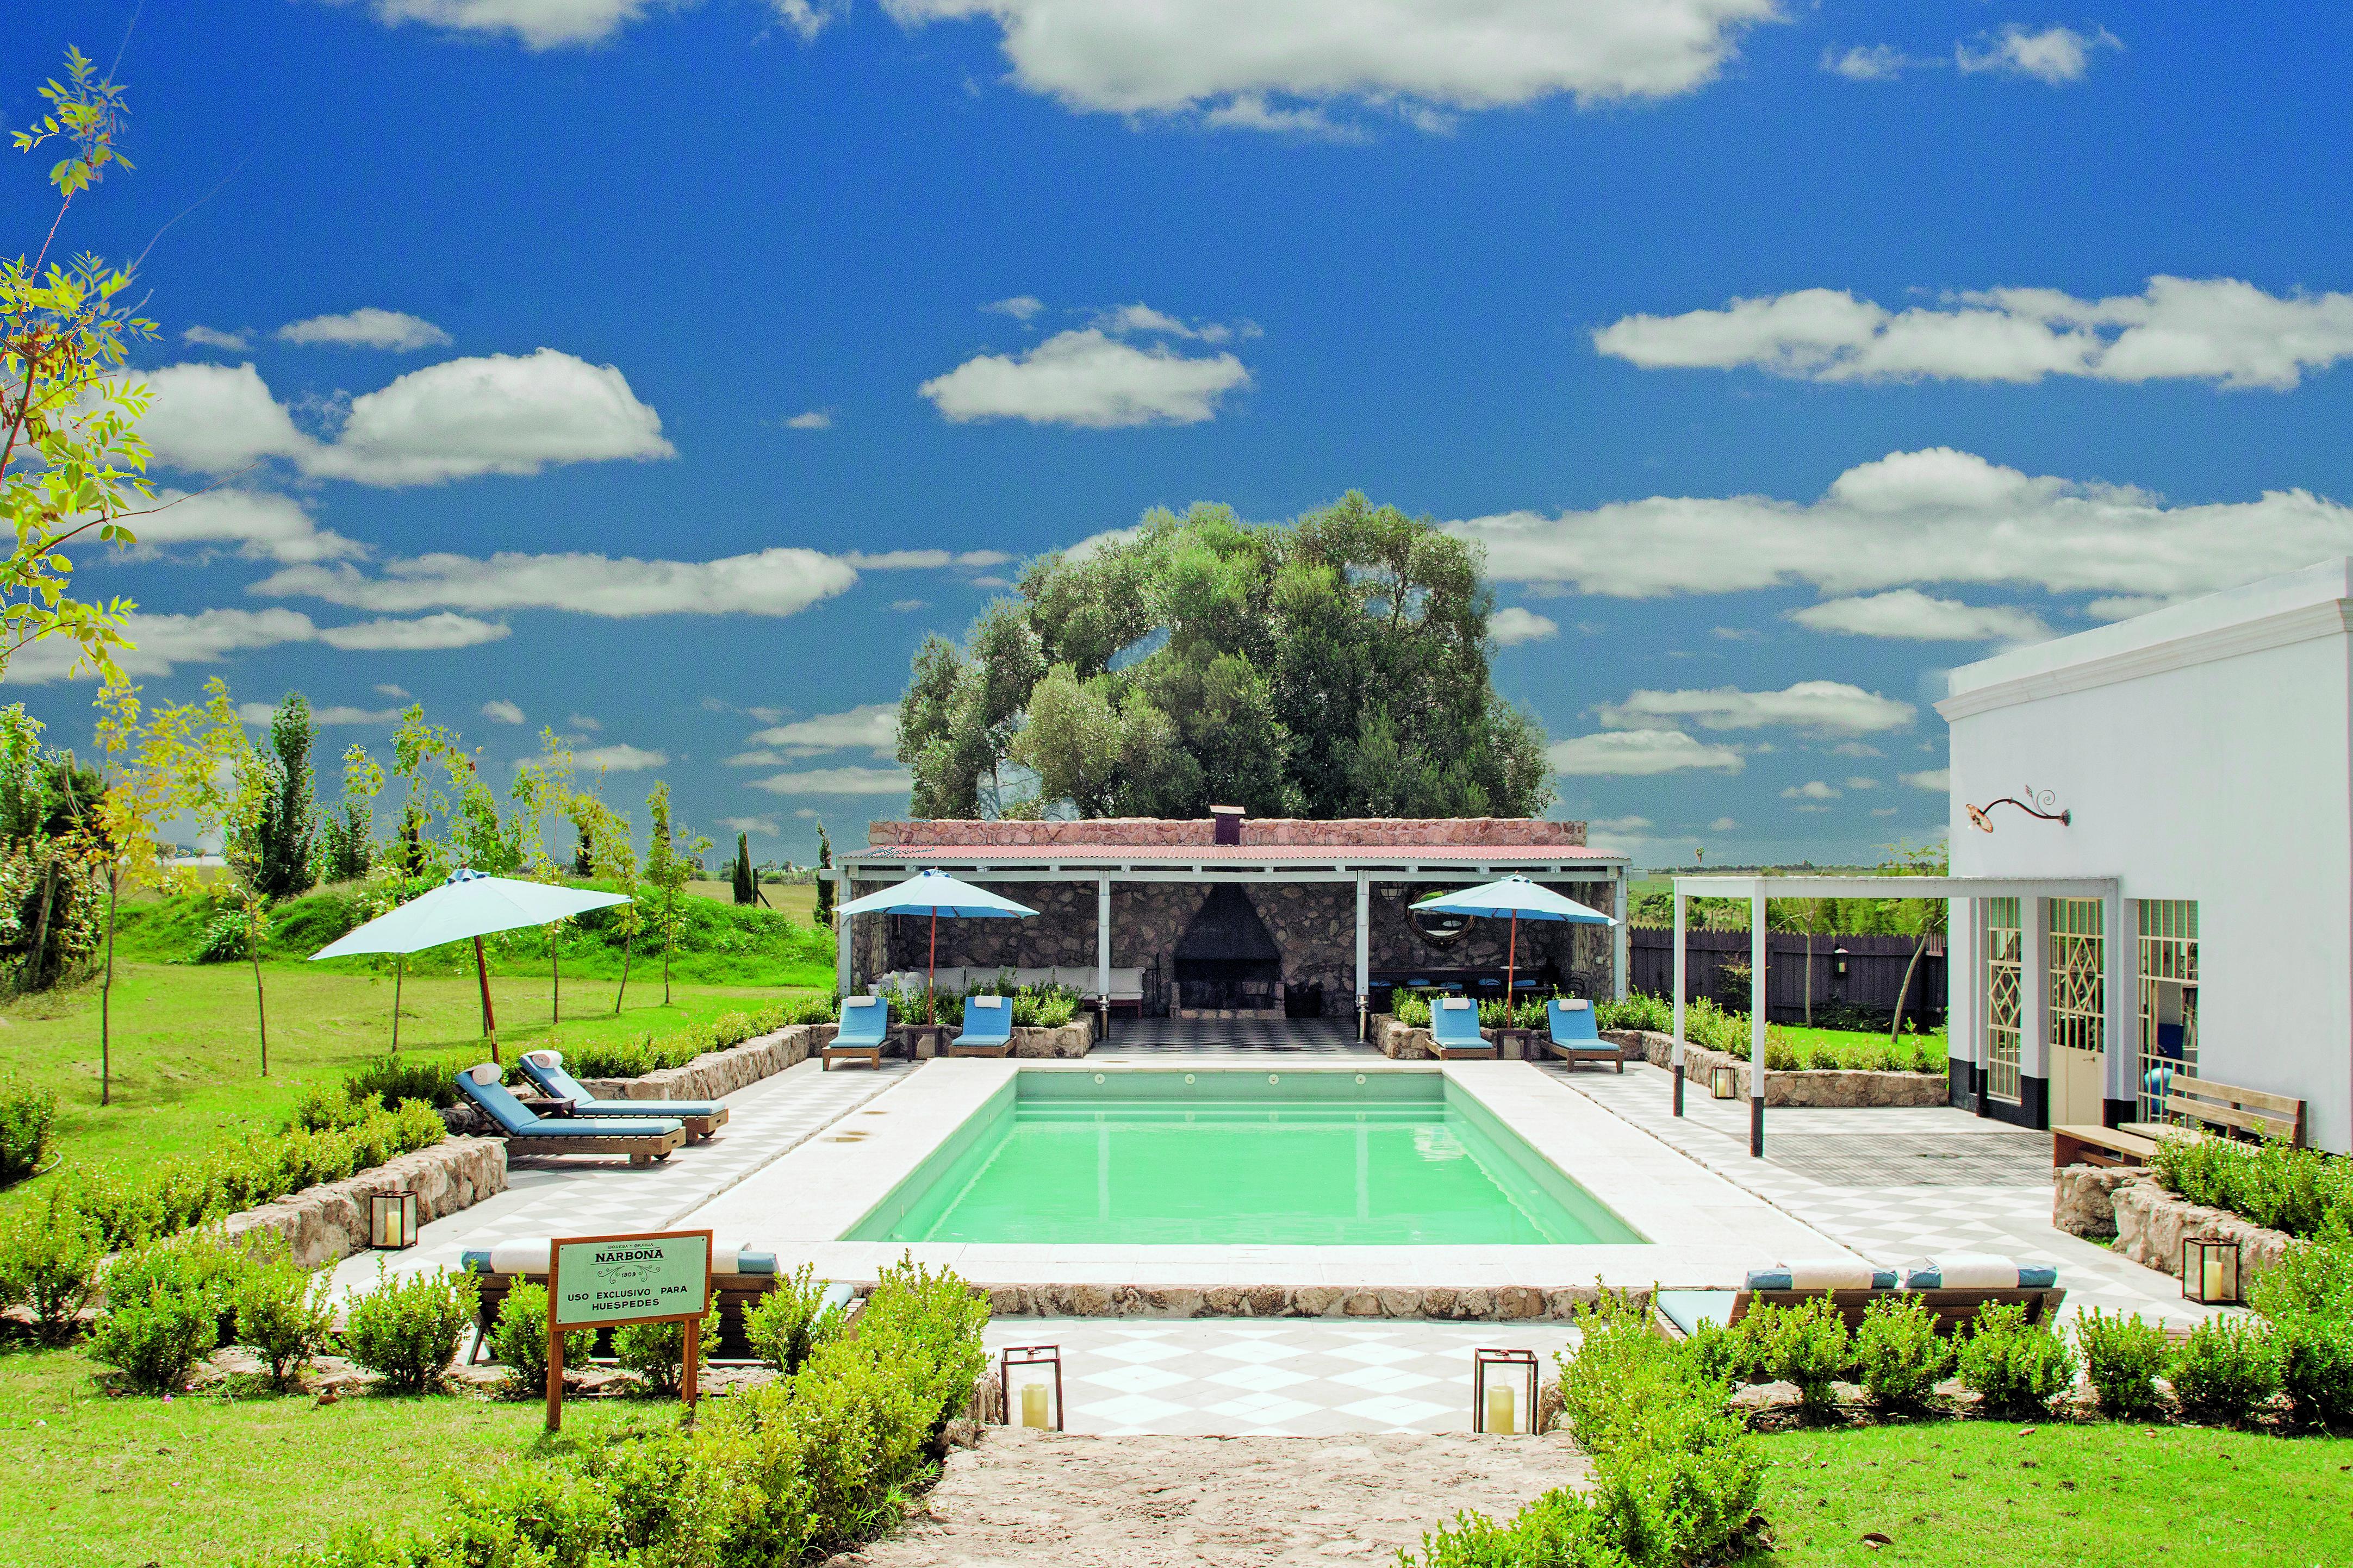 narbona wine lodge pool